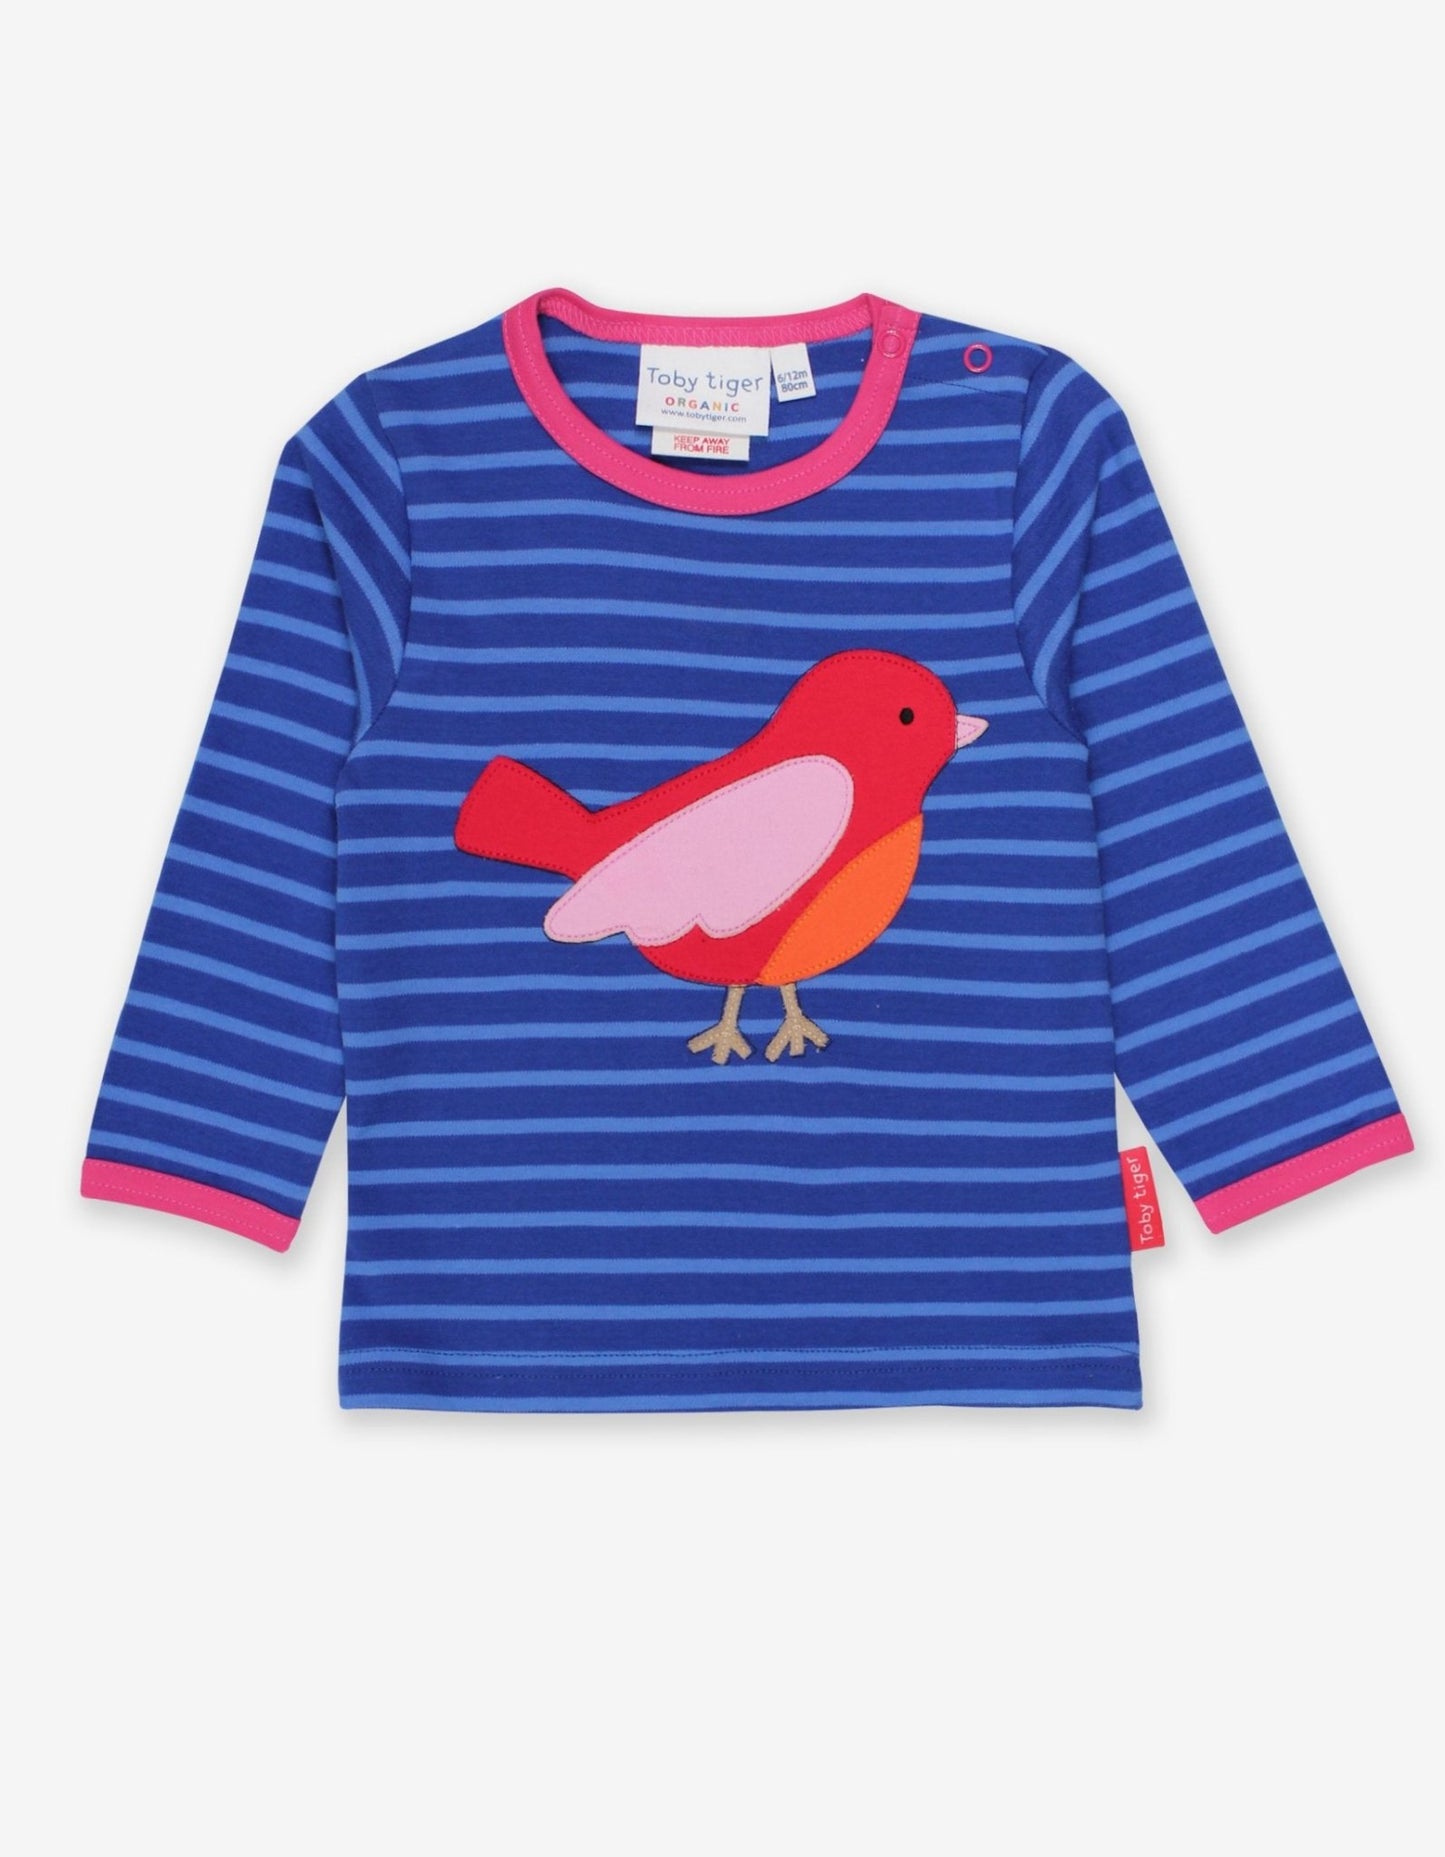 Organic Red Bird Applique T-Shirt - Toby Tiger